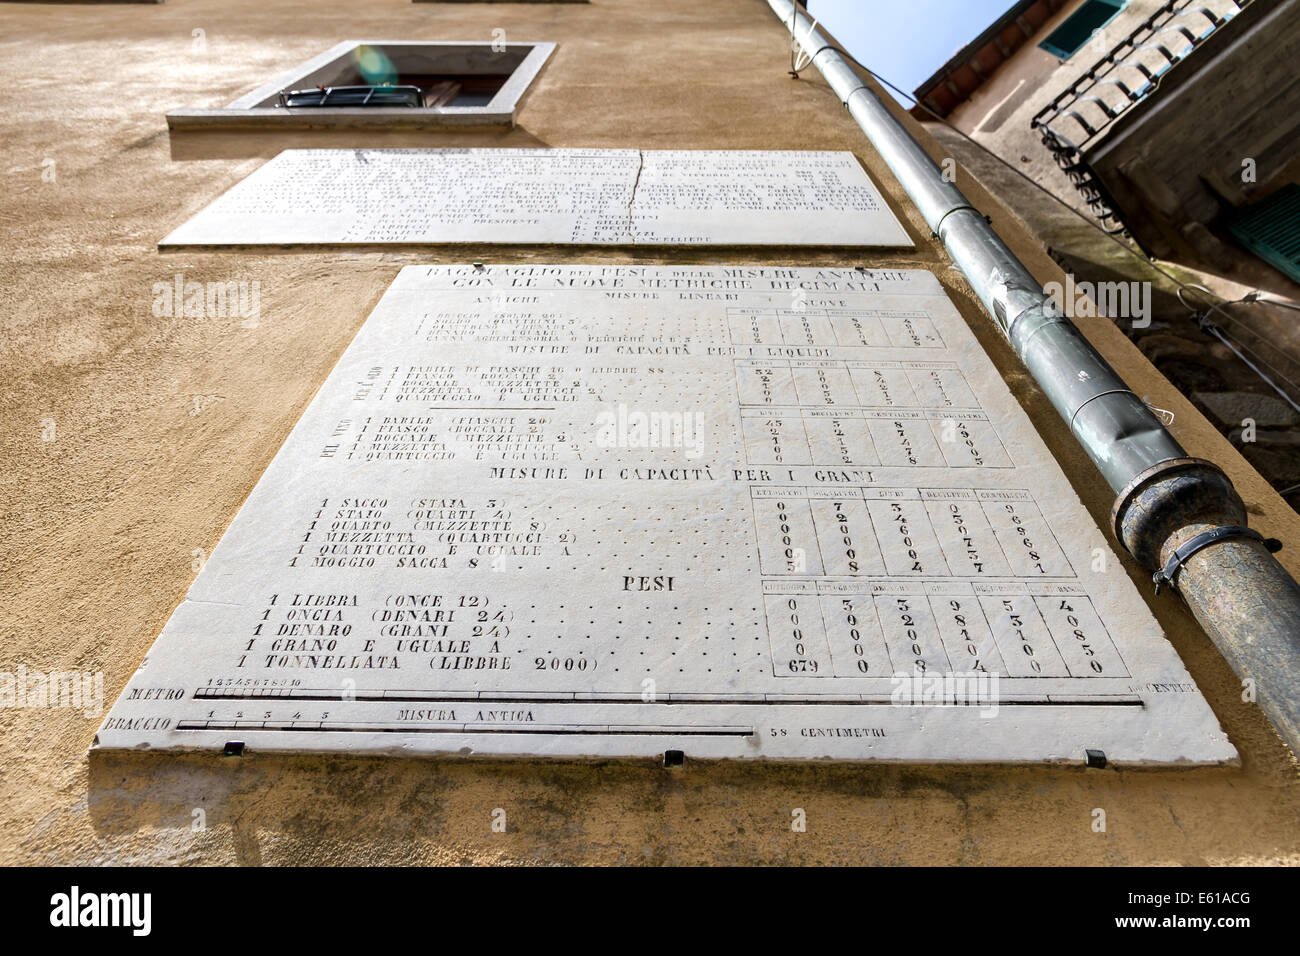 Metric system old plaque in Campiglia Marittima, a comune (municipality) in the Italian region Tuscany Stock Photo